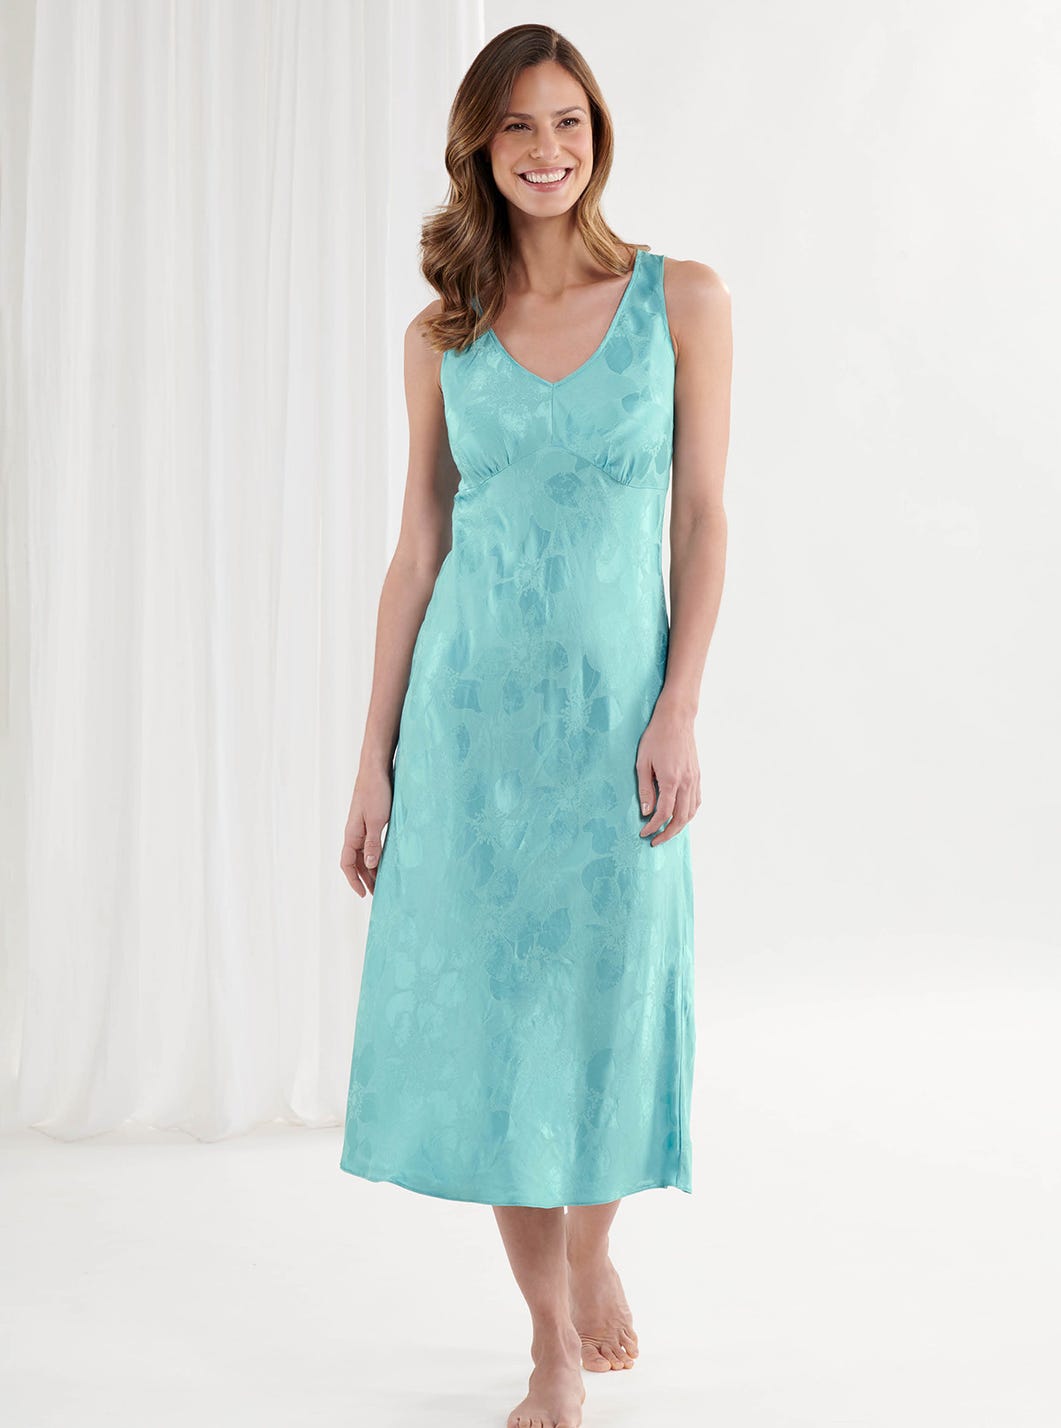 Turquoise Elegant Satin Nightdress 0630